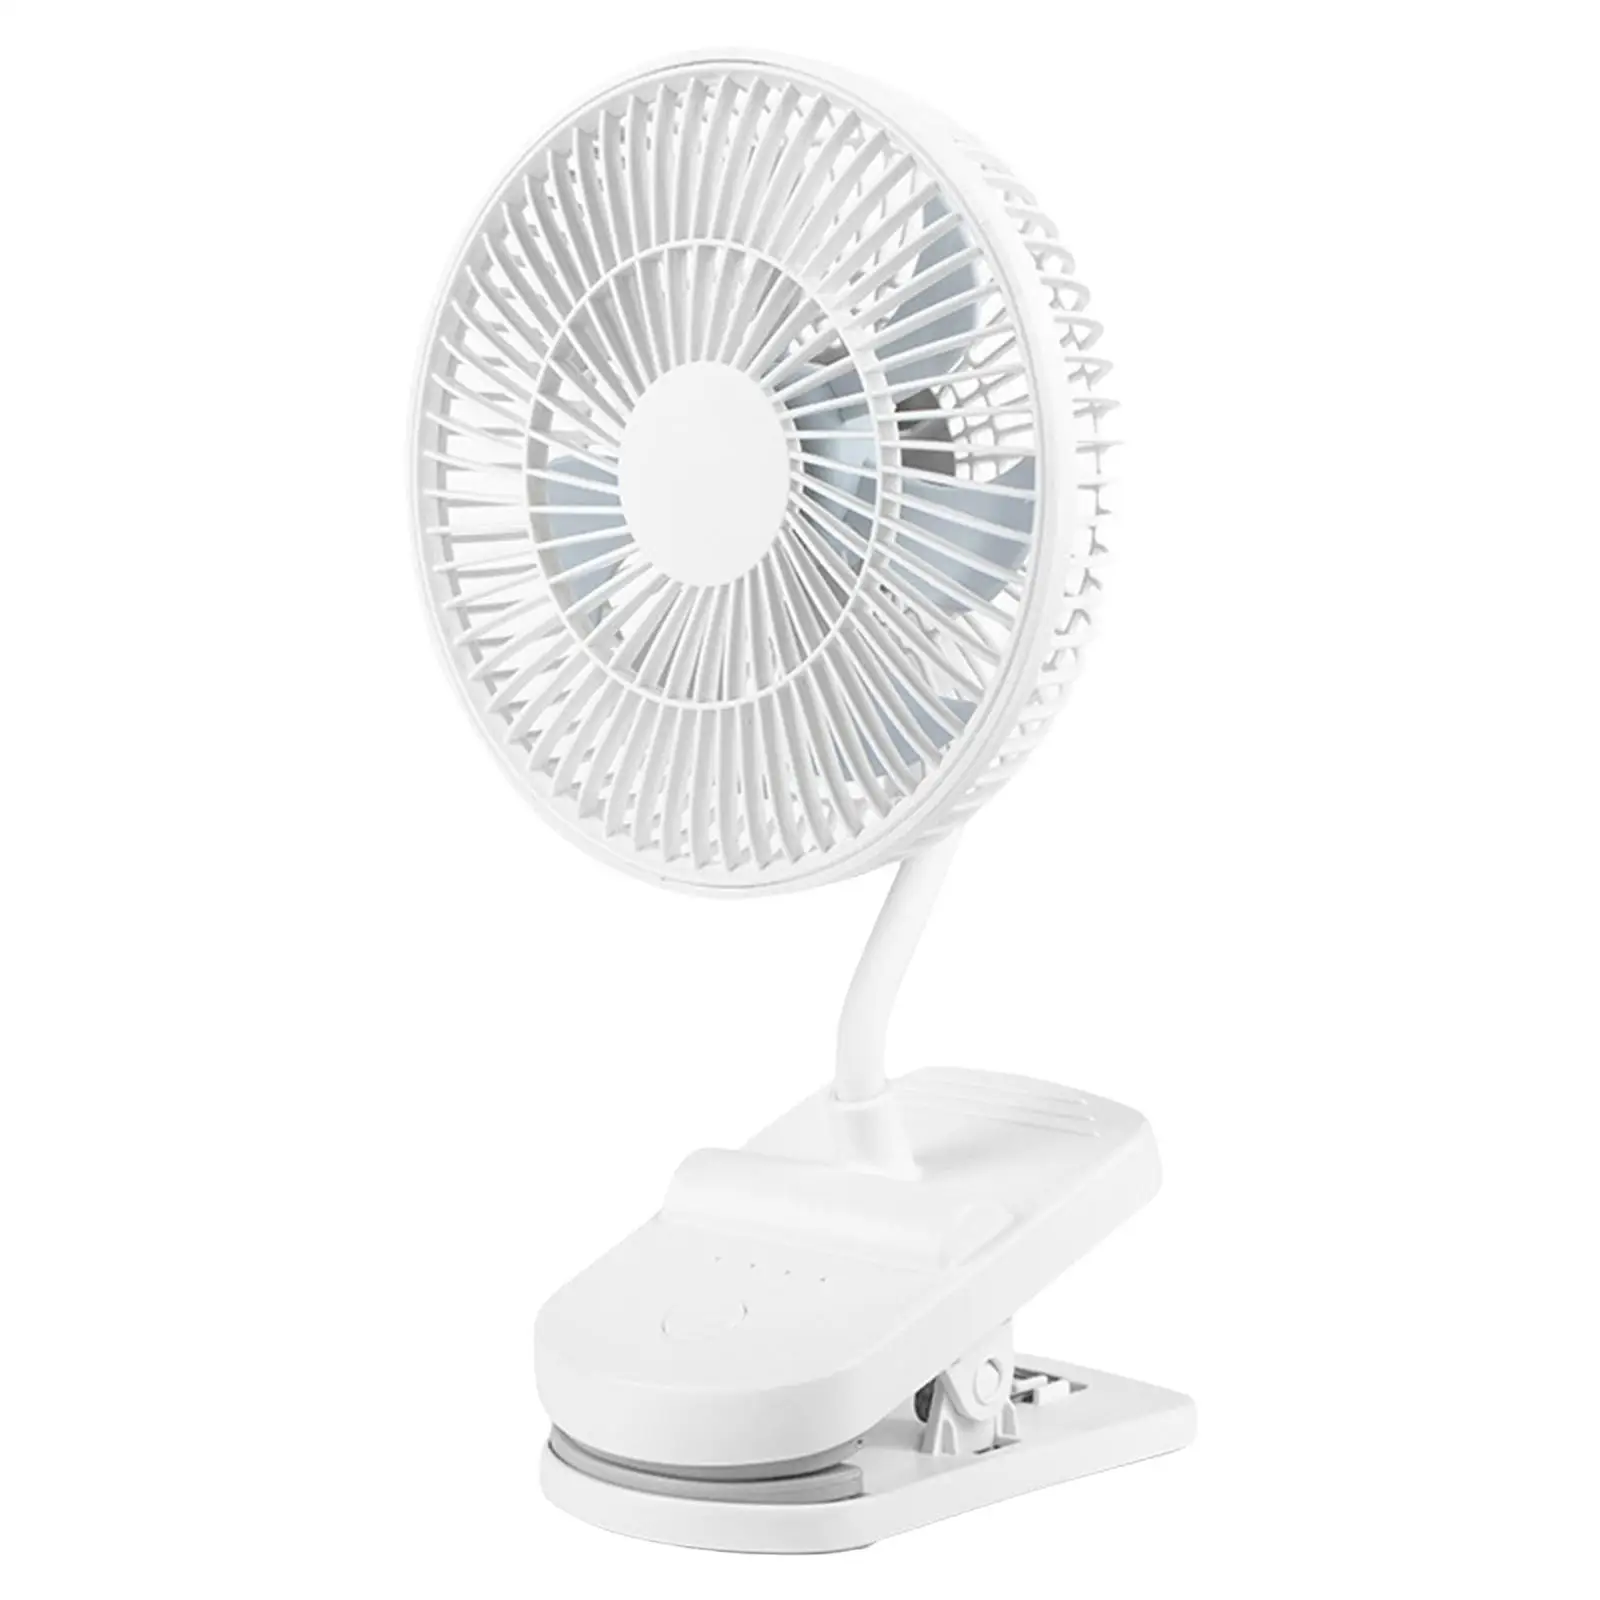 Desk Mini USB Fan Clip-on Portable Table Fan for Office Bedroom Strong Wind Quiet Cooler Four Gears Adjustable